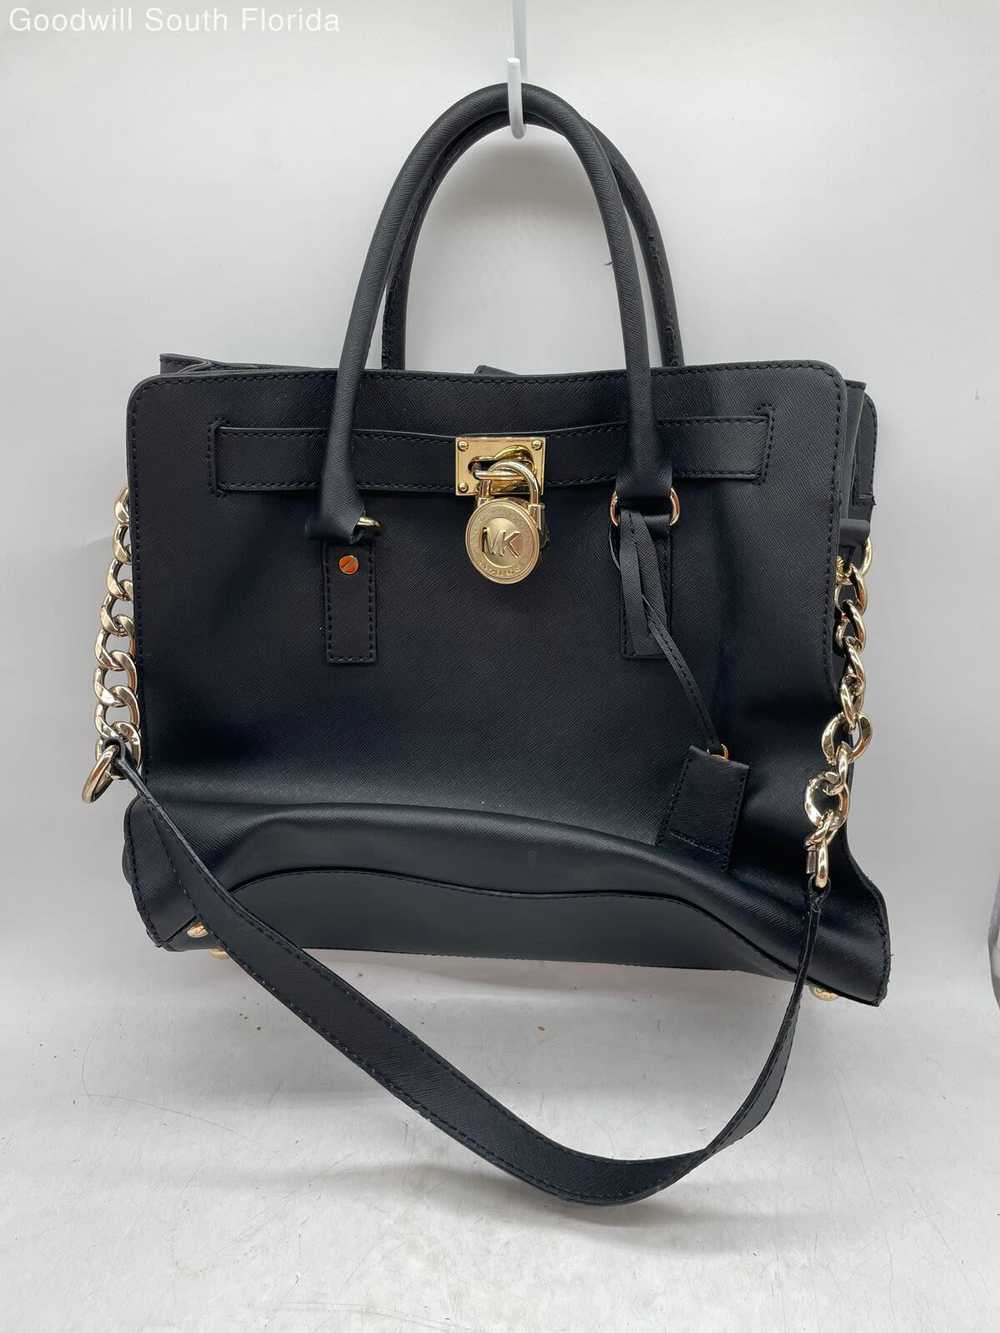 Michael Kors Womens Black Handbag - image 1